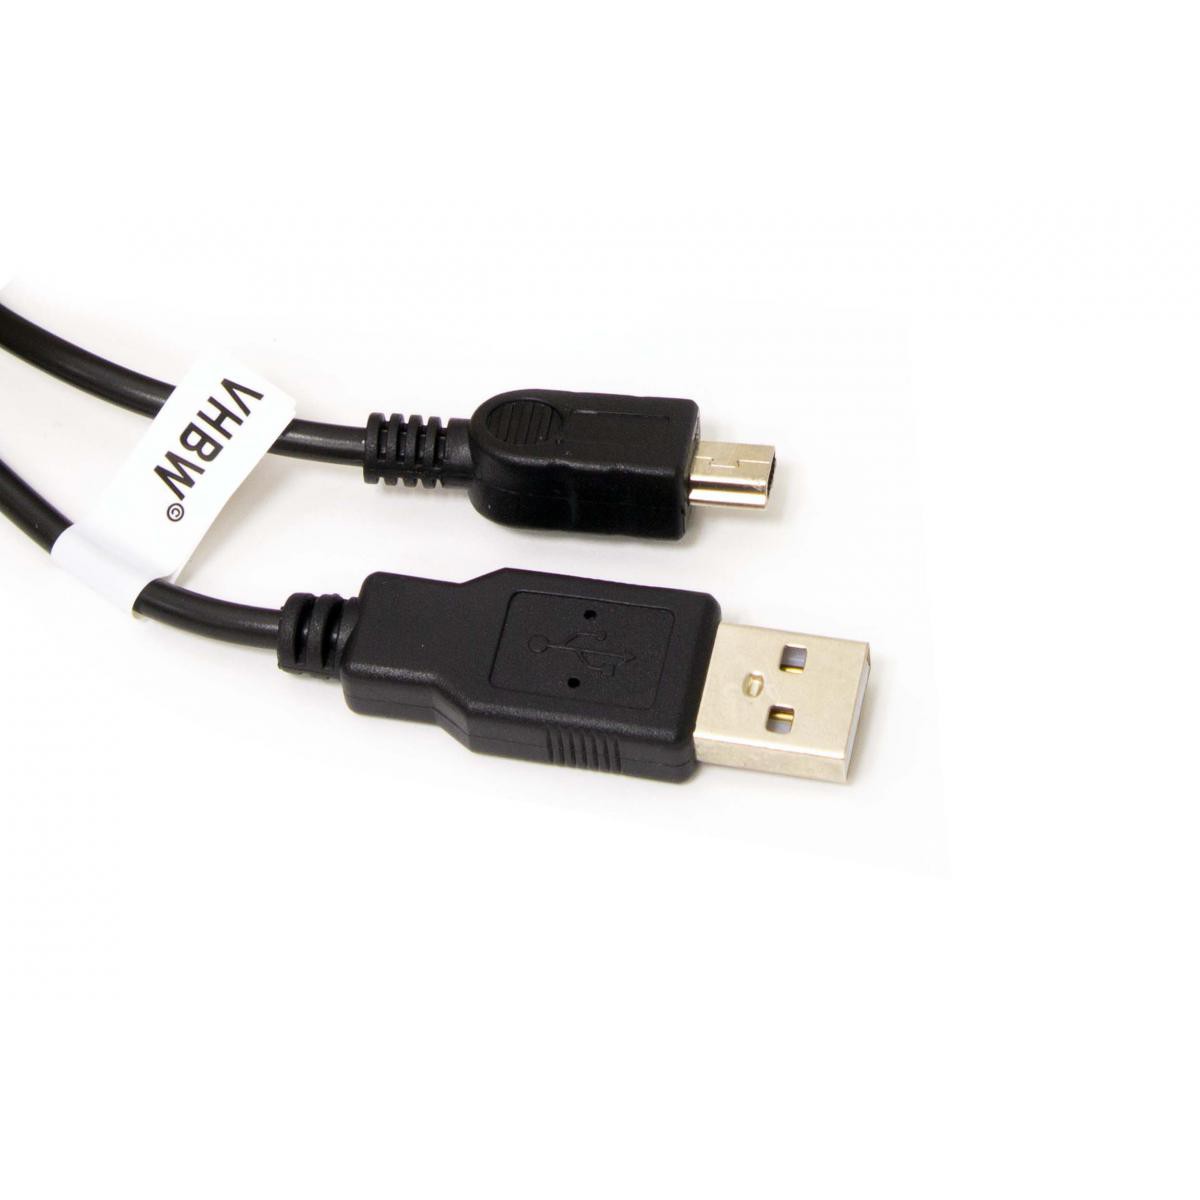 Vhbw - Câble USB A-Mini-B 5 pôles noir/black, longueur 1m, pour NIKON - Câble antenne